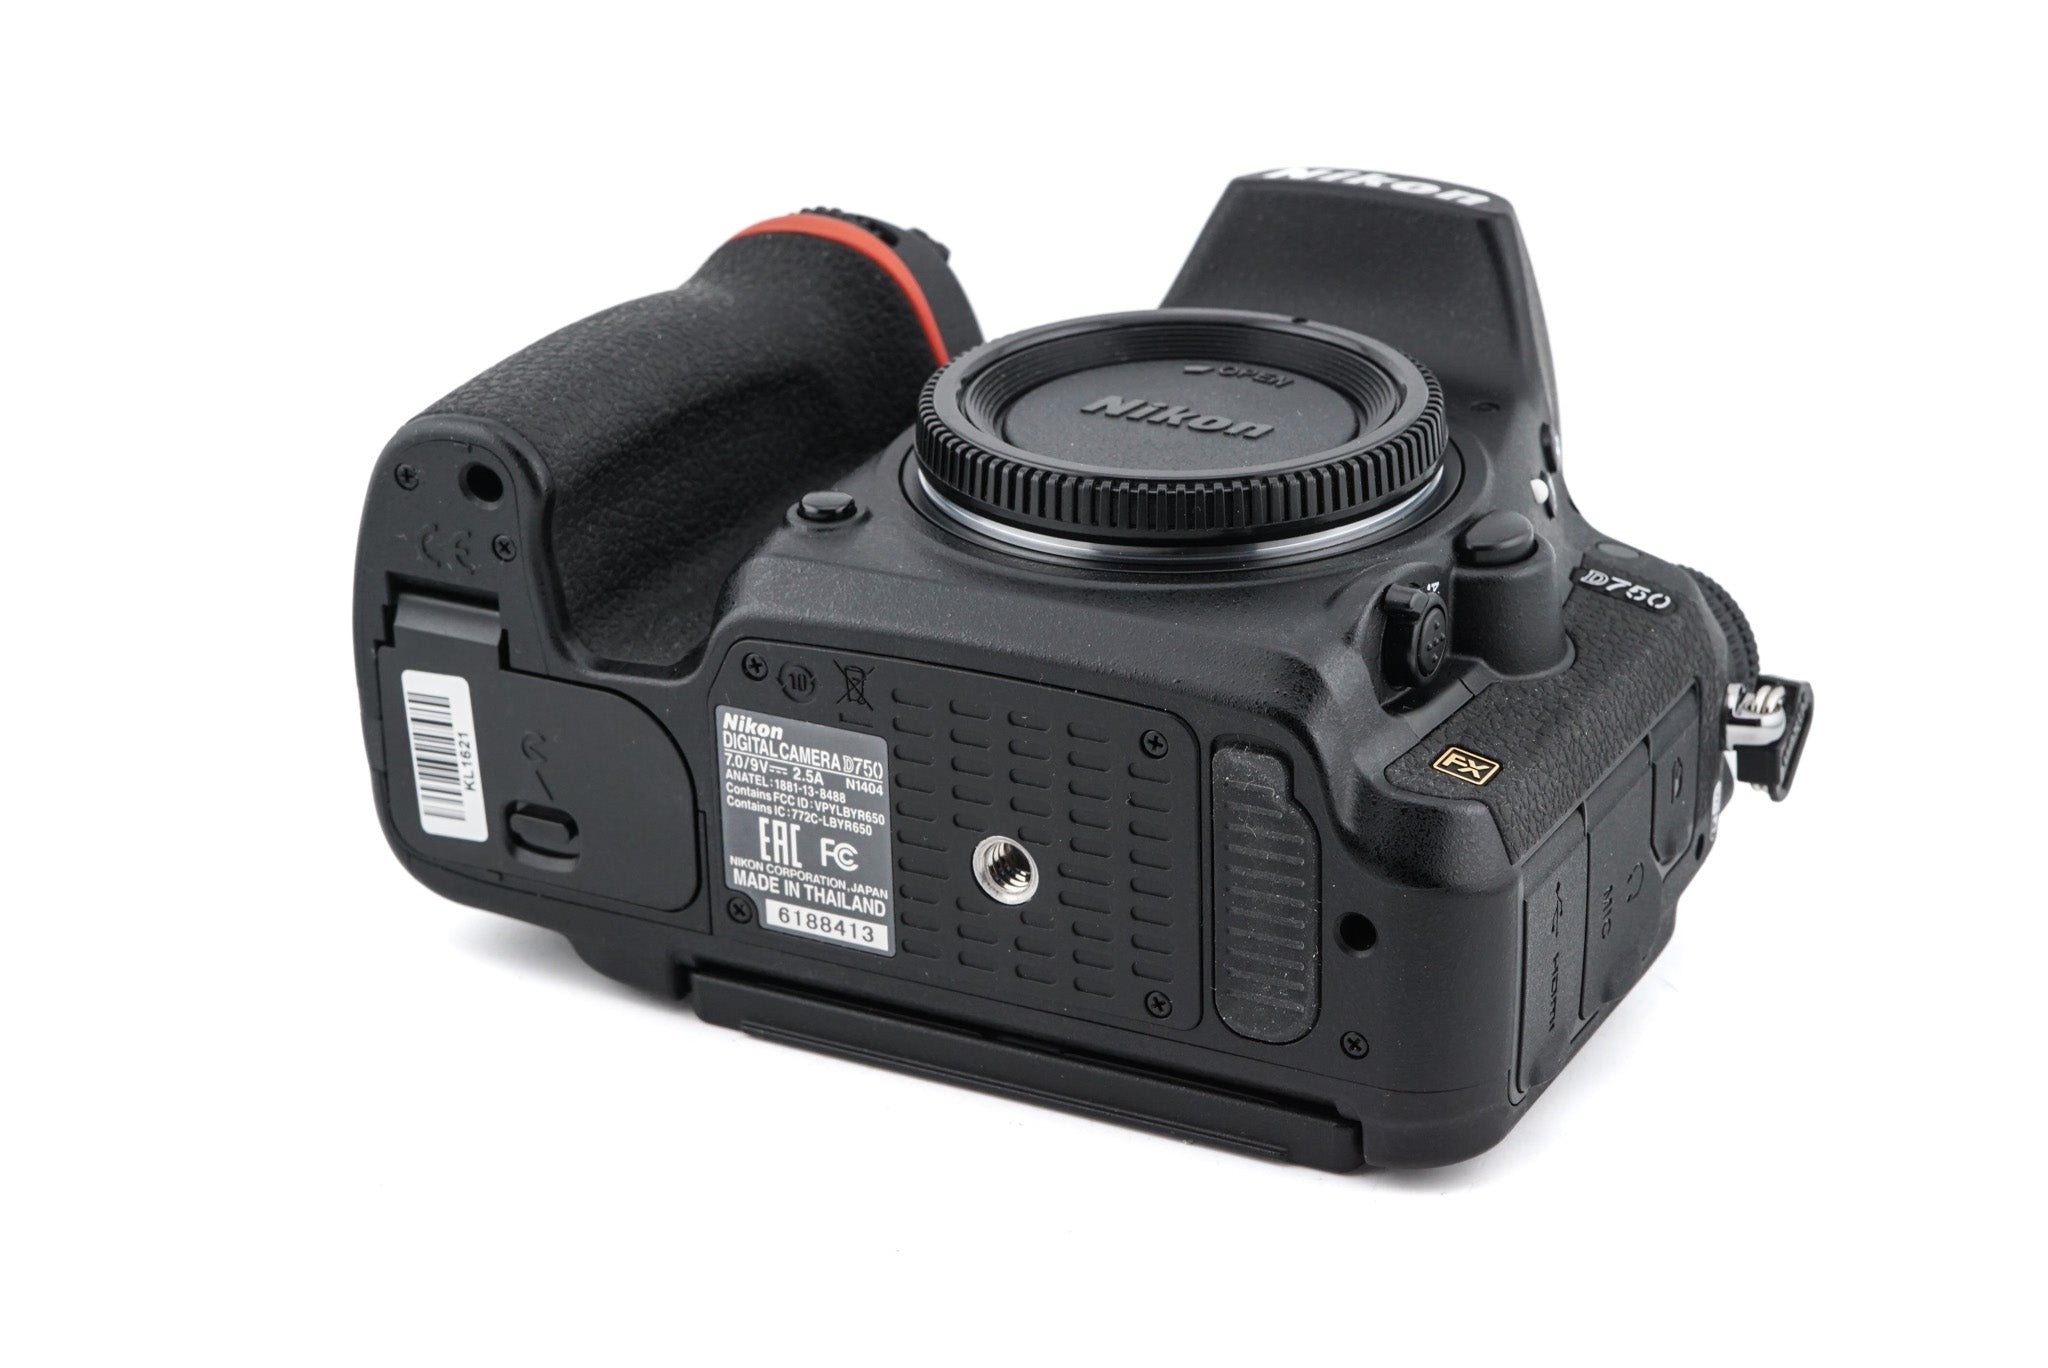 Nikon D750 – Kamerastore